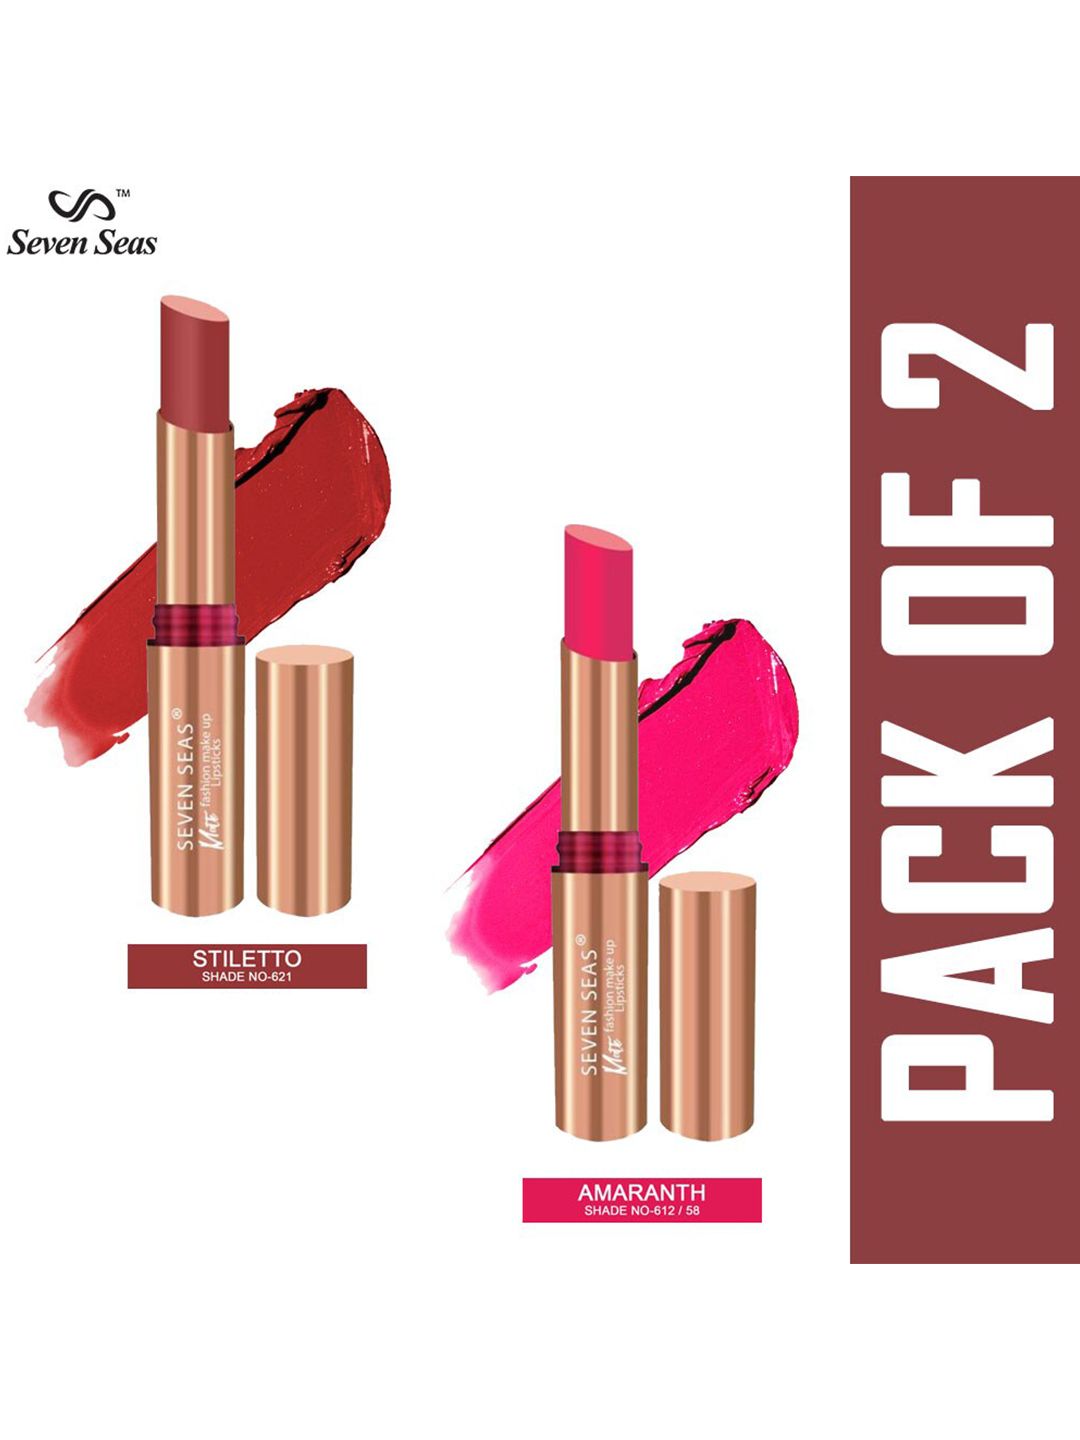 Seven Seas Set of 2 Matte With You Lipstick - Stiletto 621 & Amaranth 58 Price in India